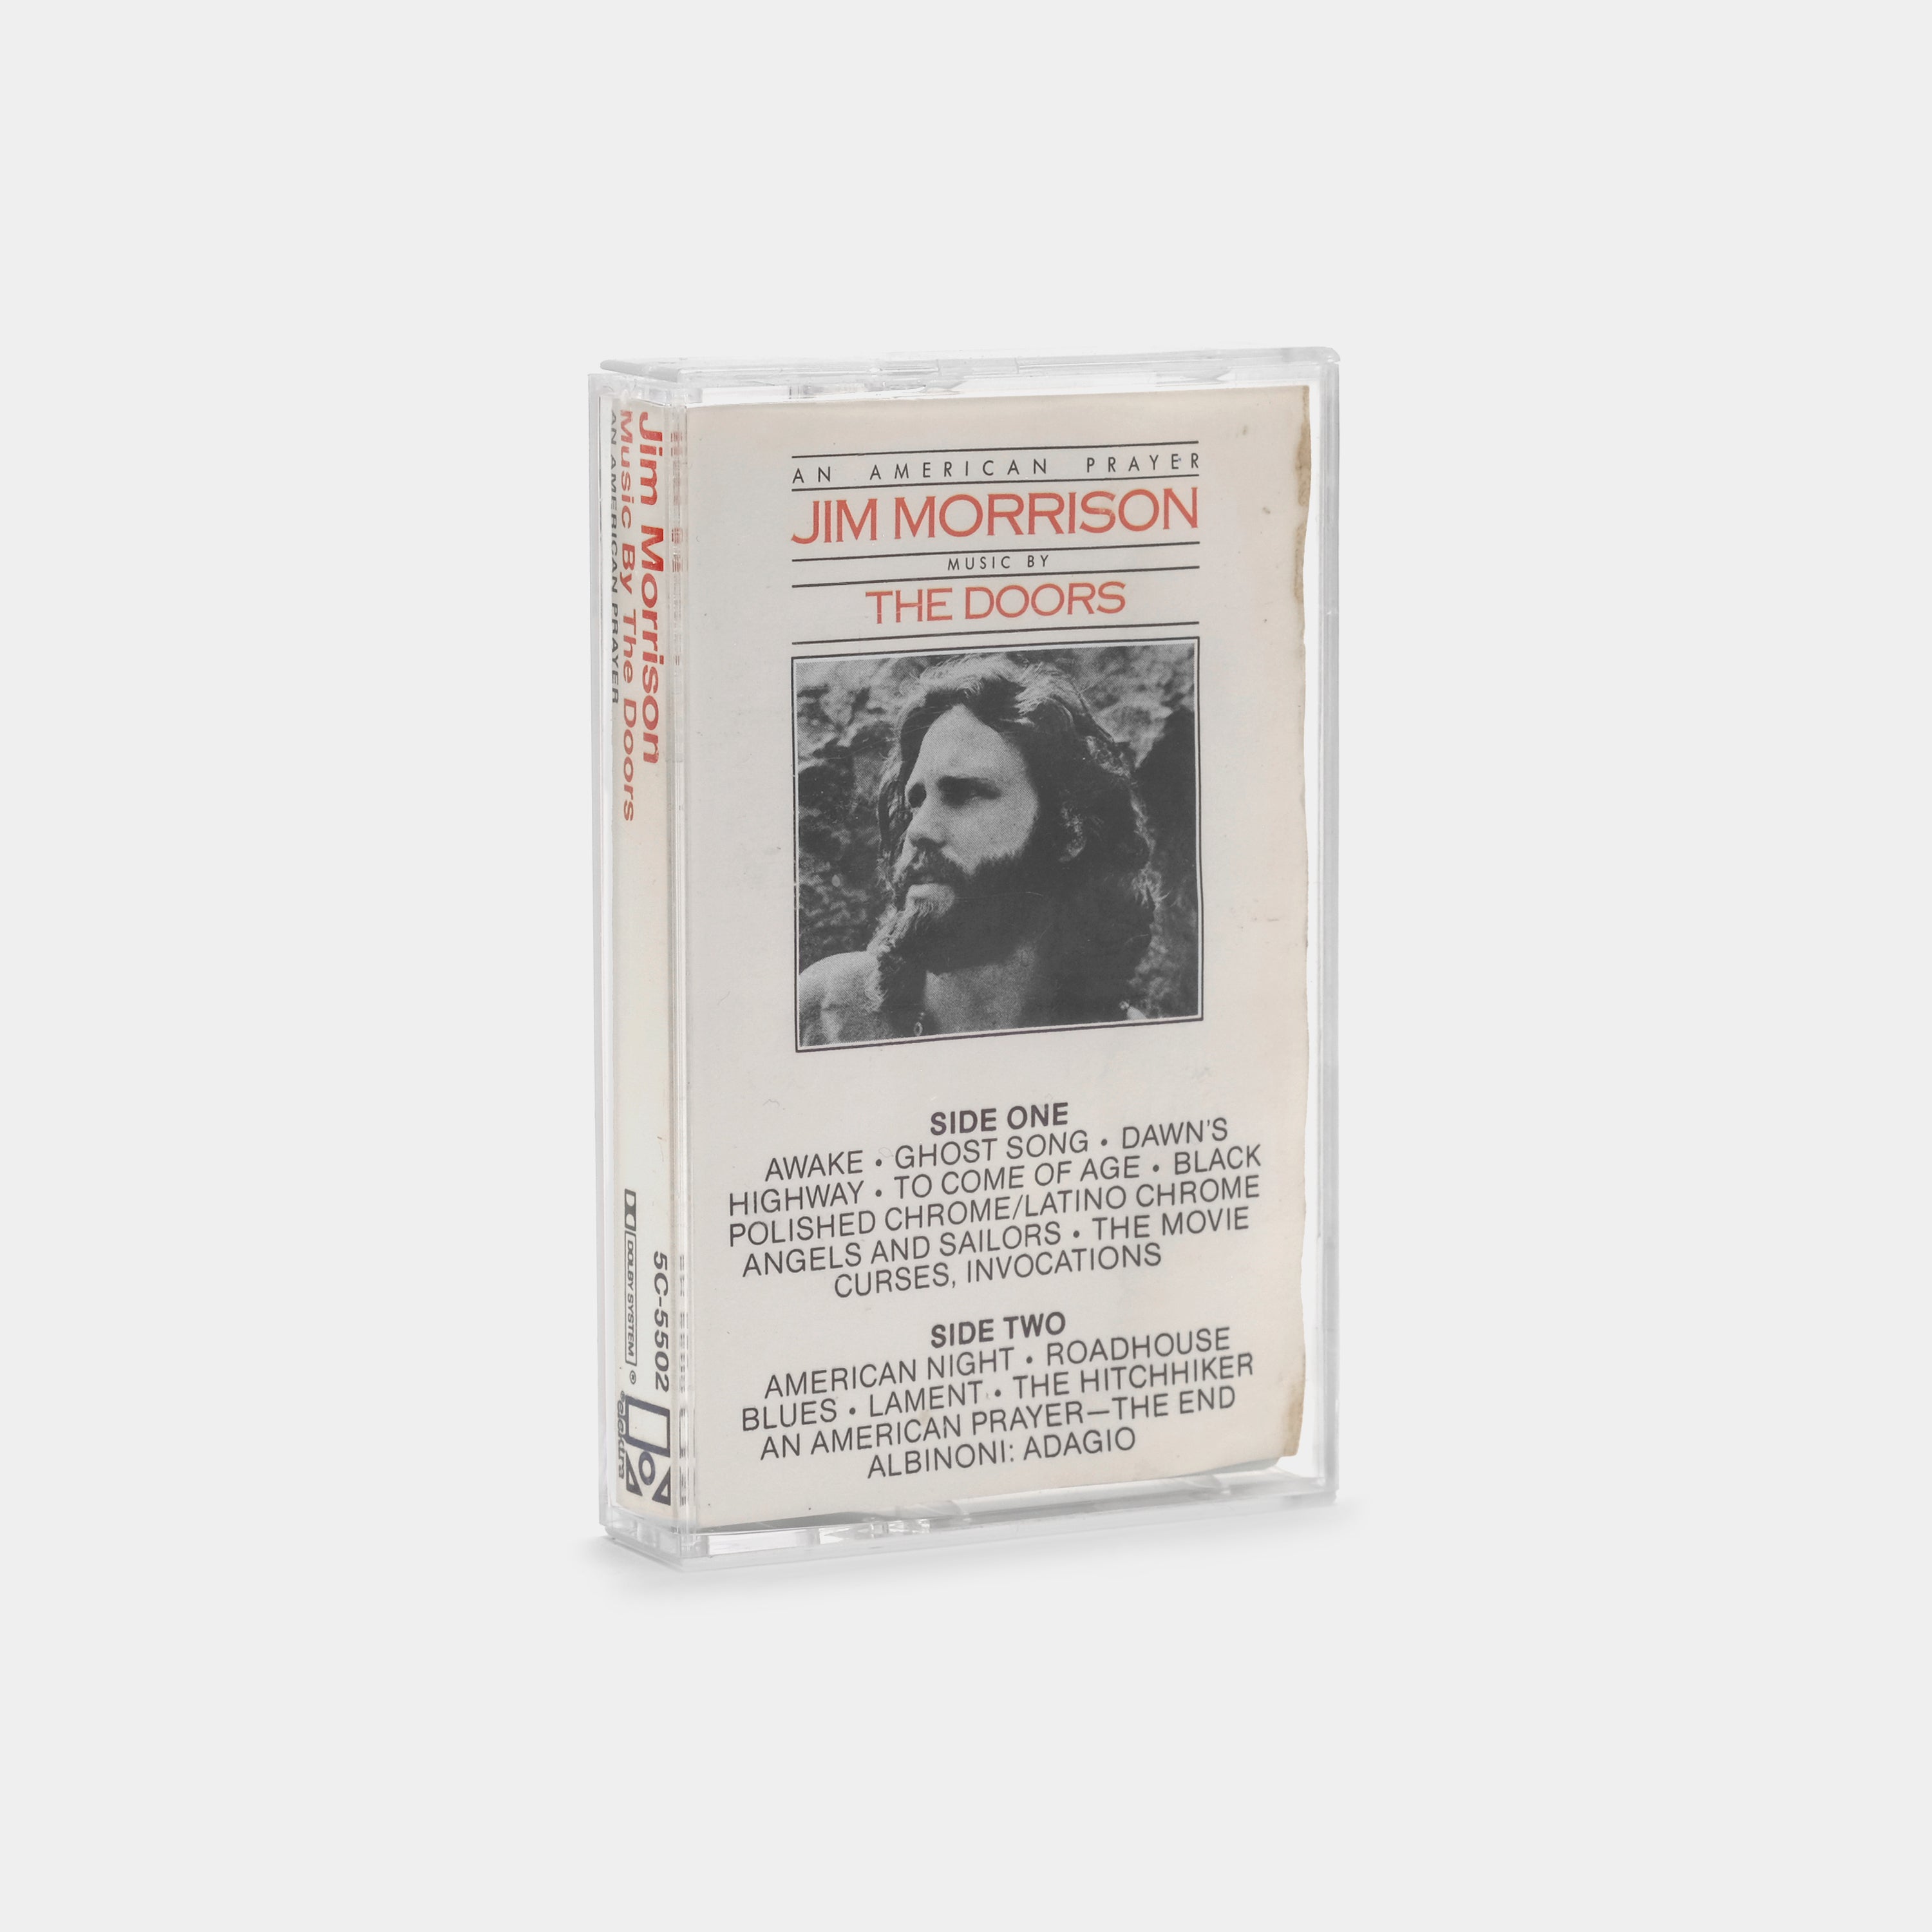 Jim Morrison Music By The Doors - An American Prayer Cassette Tape